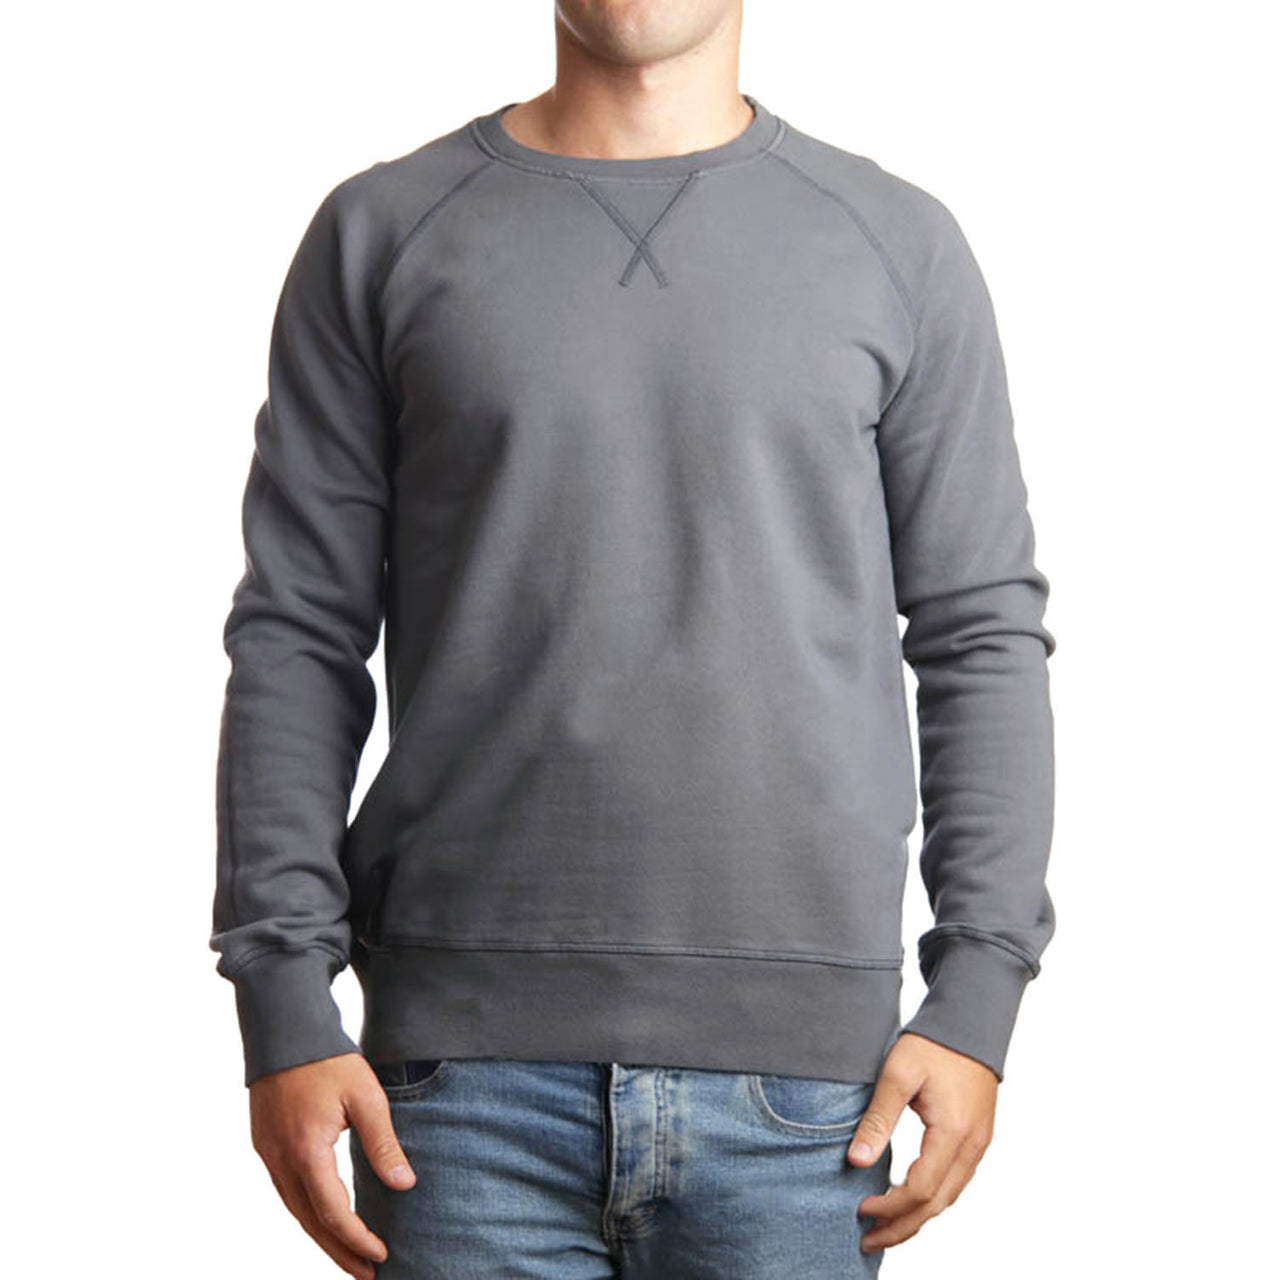 Mens Achill Island Organic Cotton Sweatshirt Grey